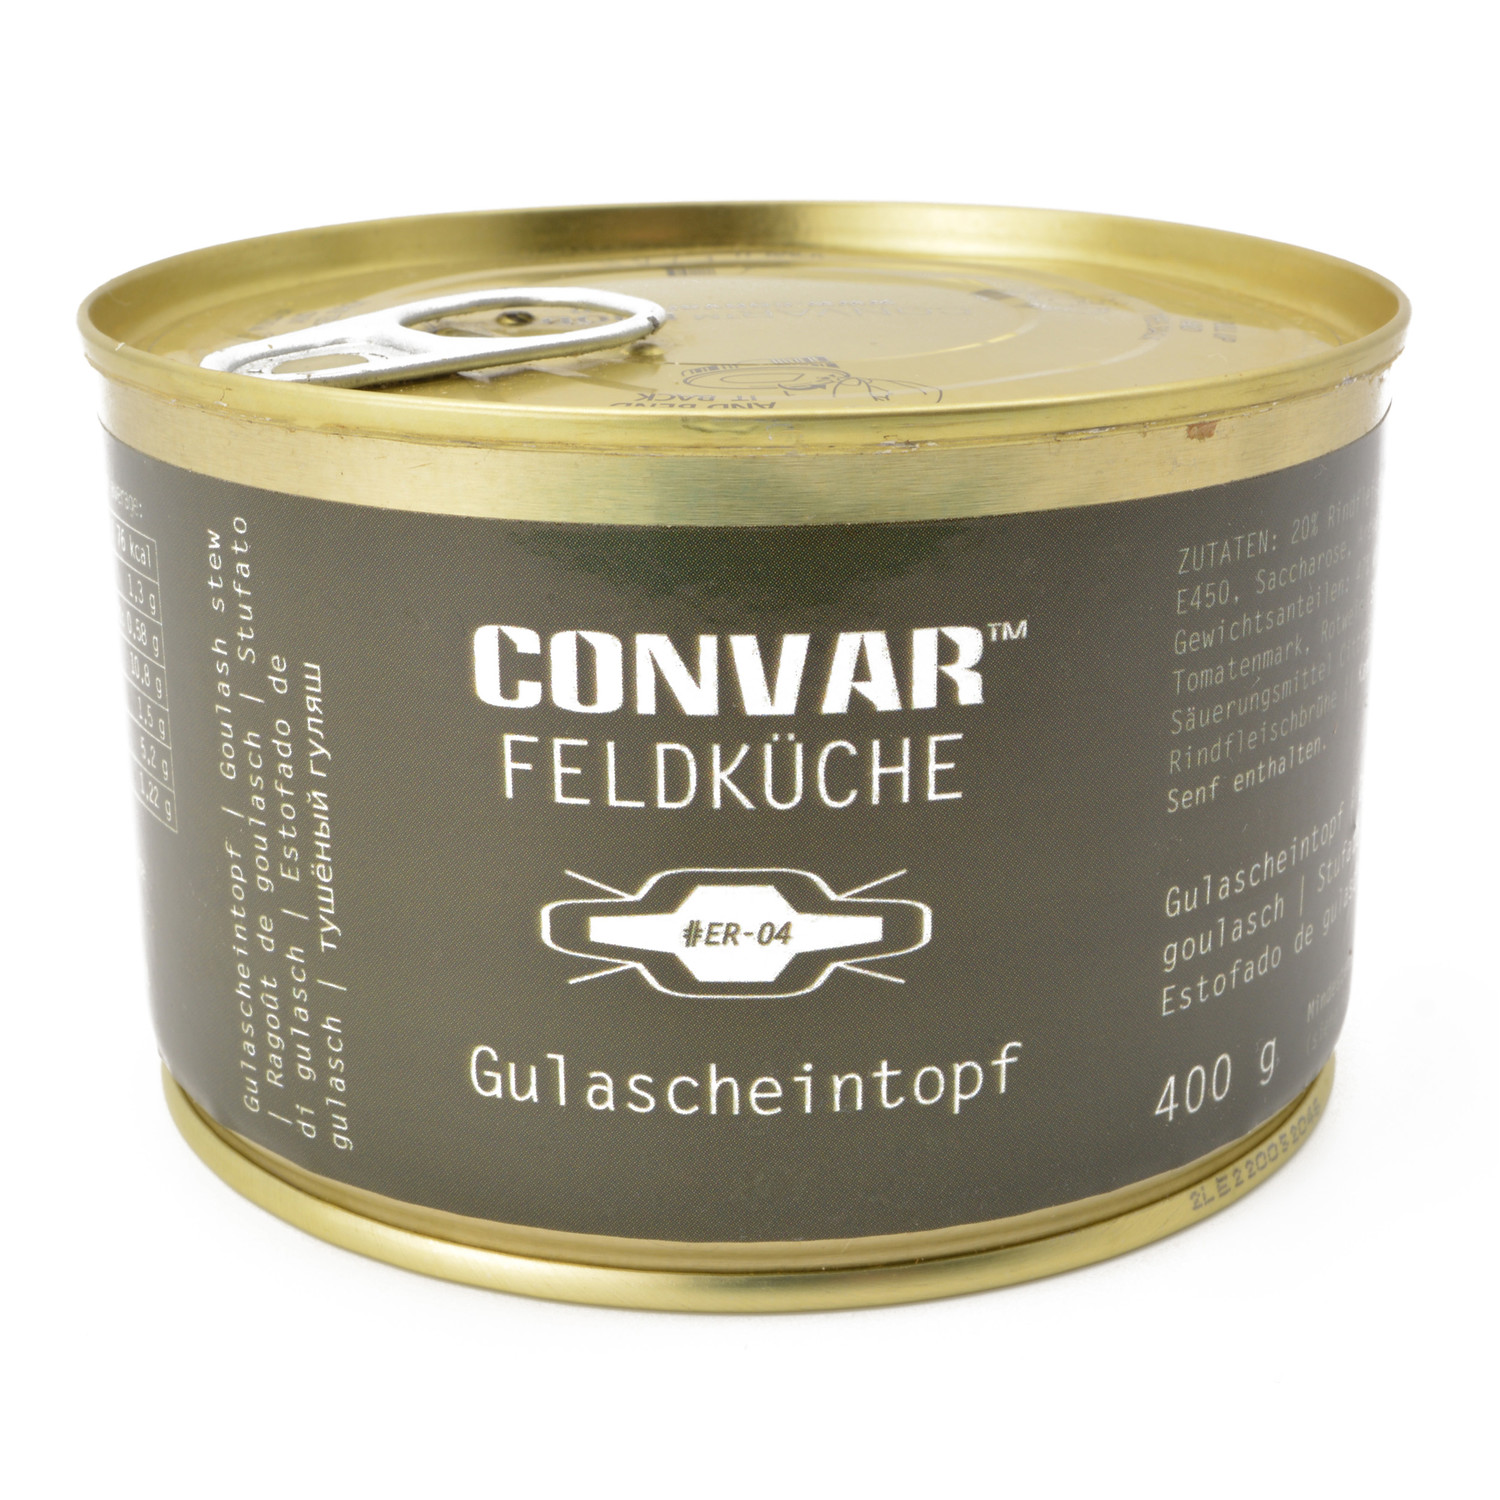 Convar Feldküche Gulascheintopf (400 g) - 10 Jahre haltbar